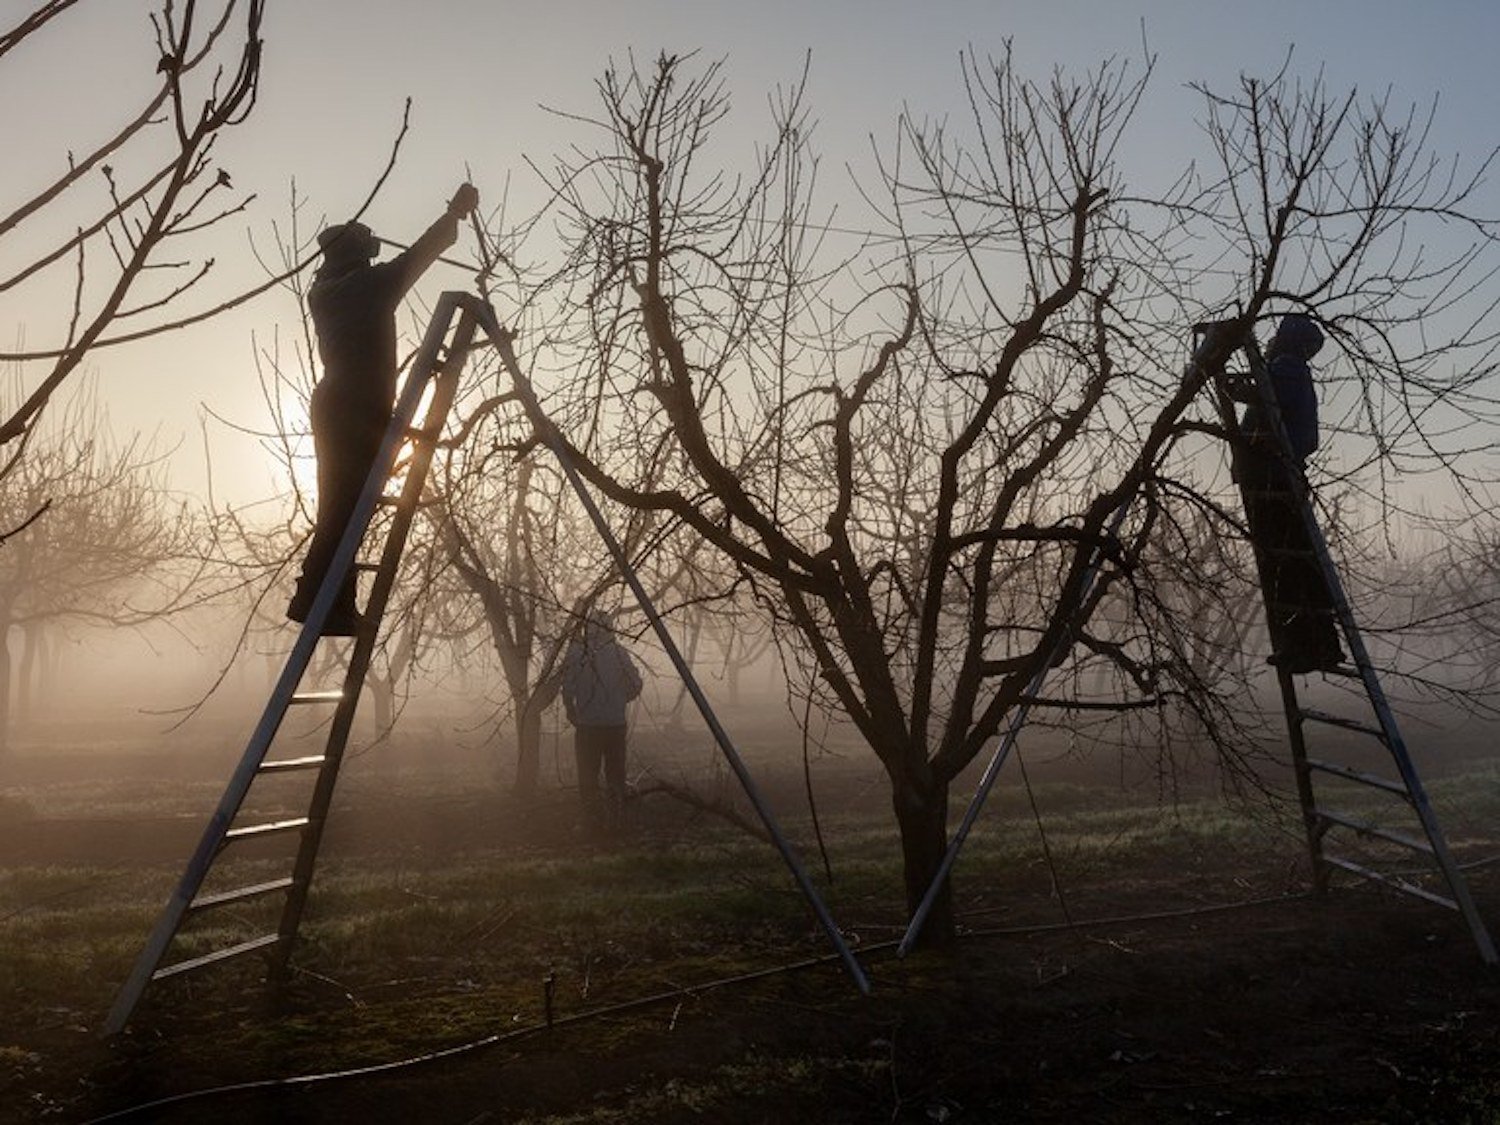 Punjabi American farmers prune peach trees in the early morning light on Karm Bain’s farm in Yuba City, California. Feb. 2021